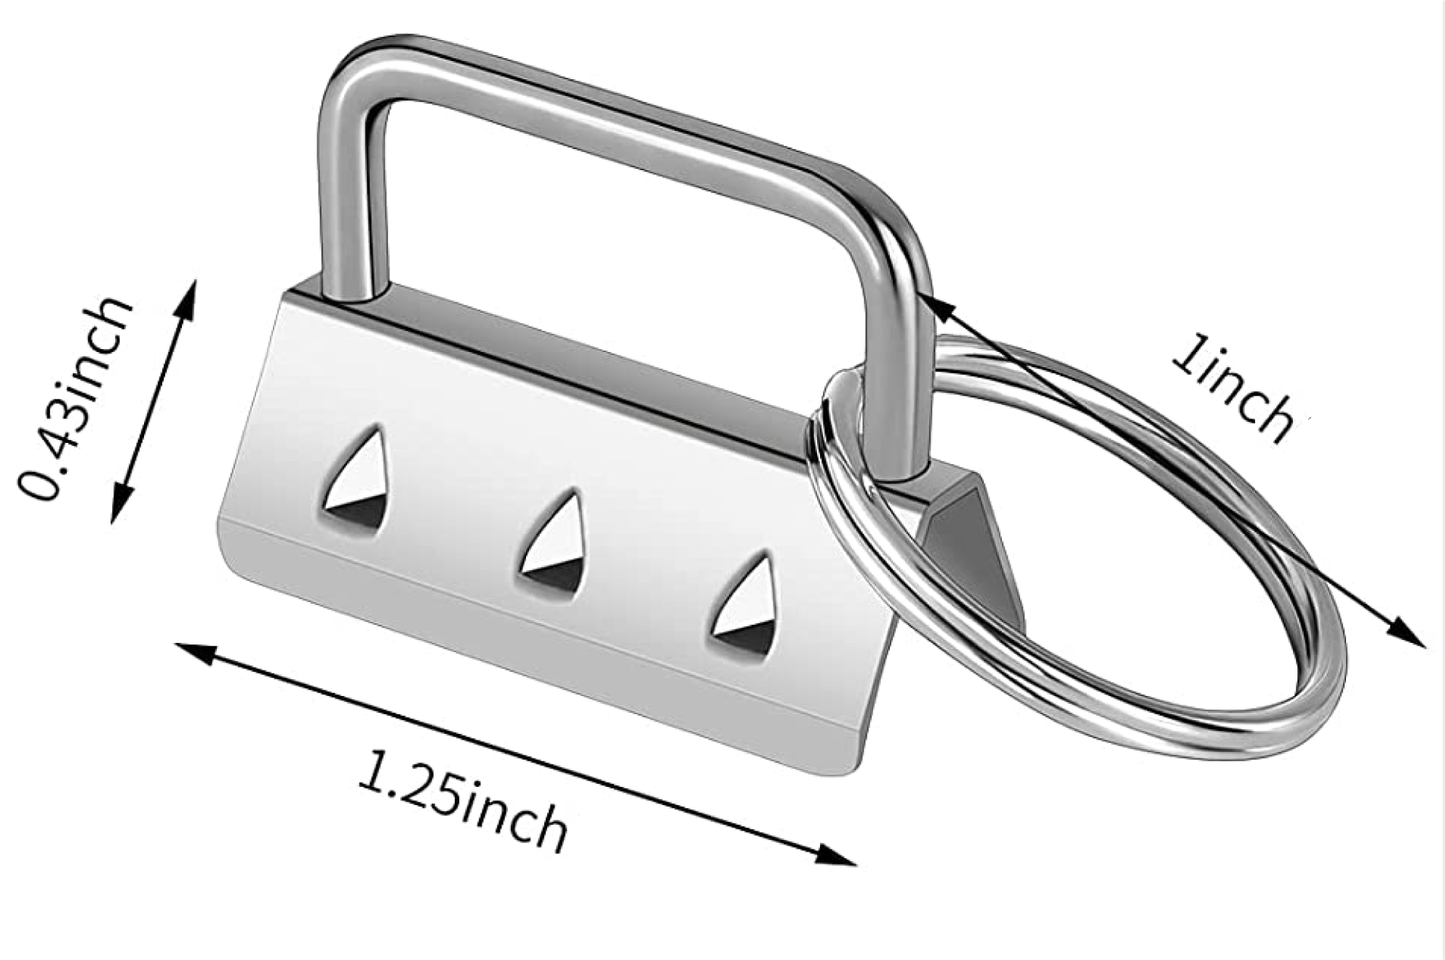 Key Ring Hardware (D Ring, Key Fob, Keyring)